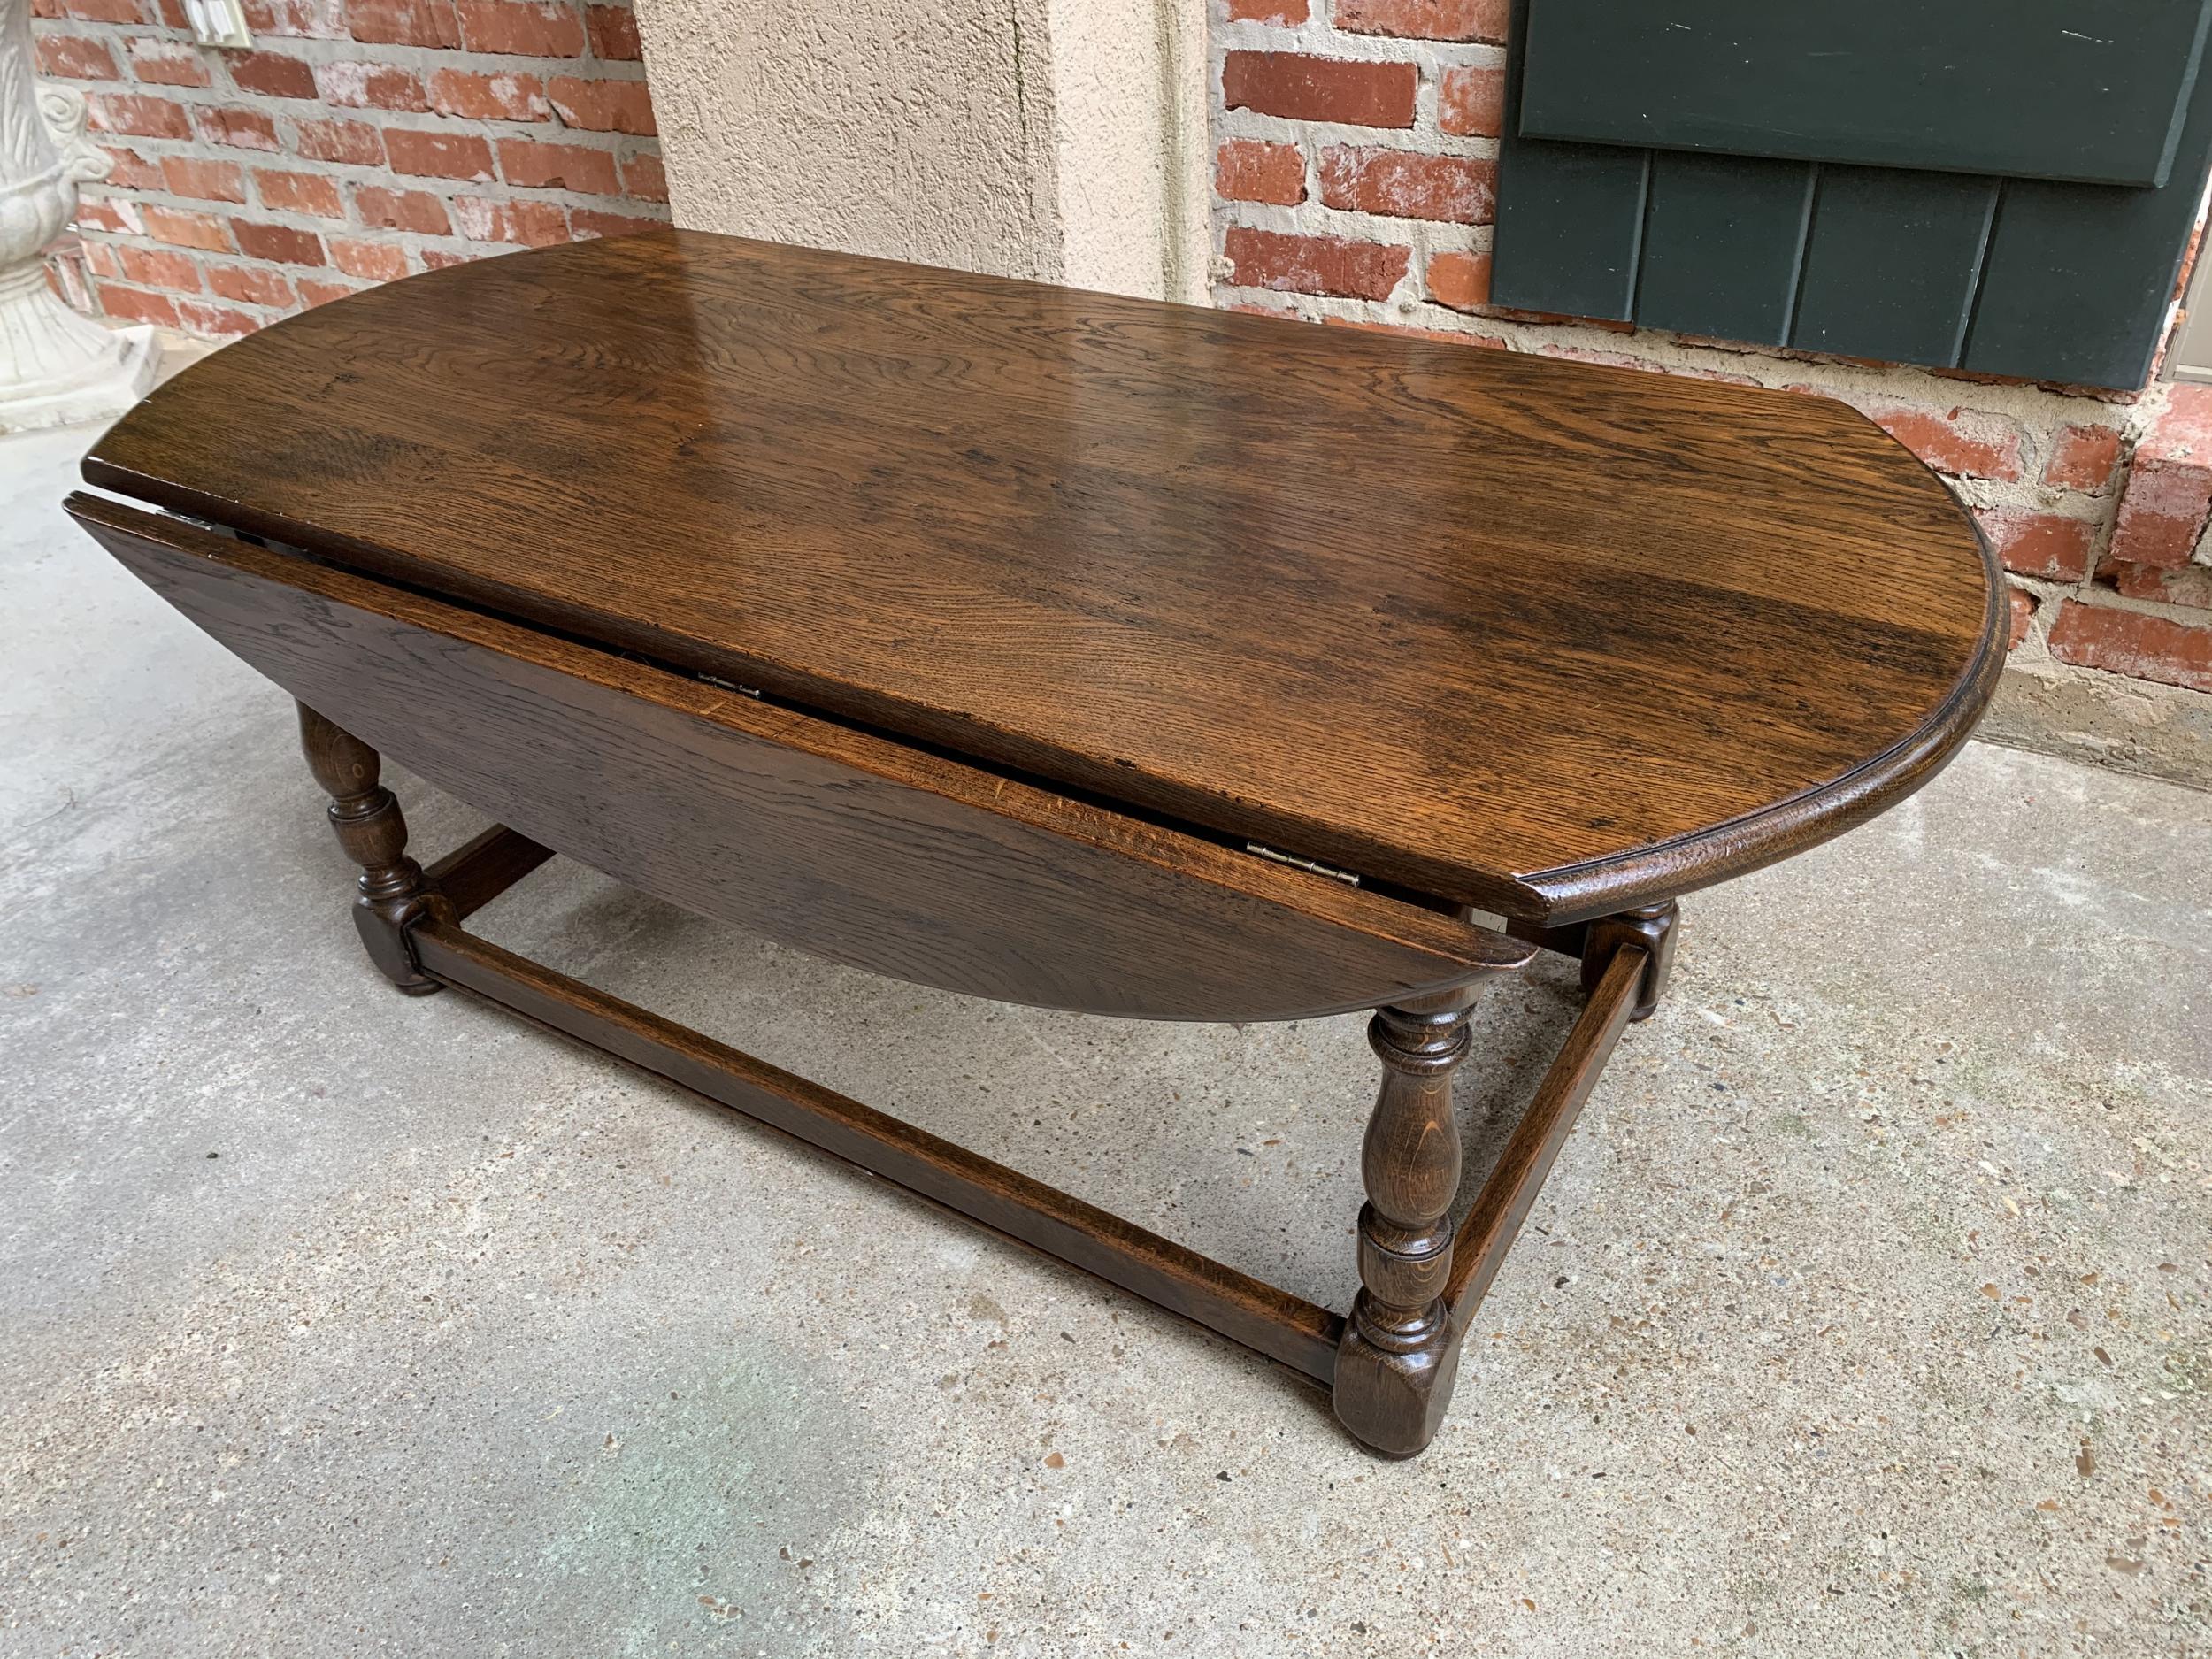 European Vintage English Coffee Table Slender Drop-Leaf Jacobean Wake Table Style Oval